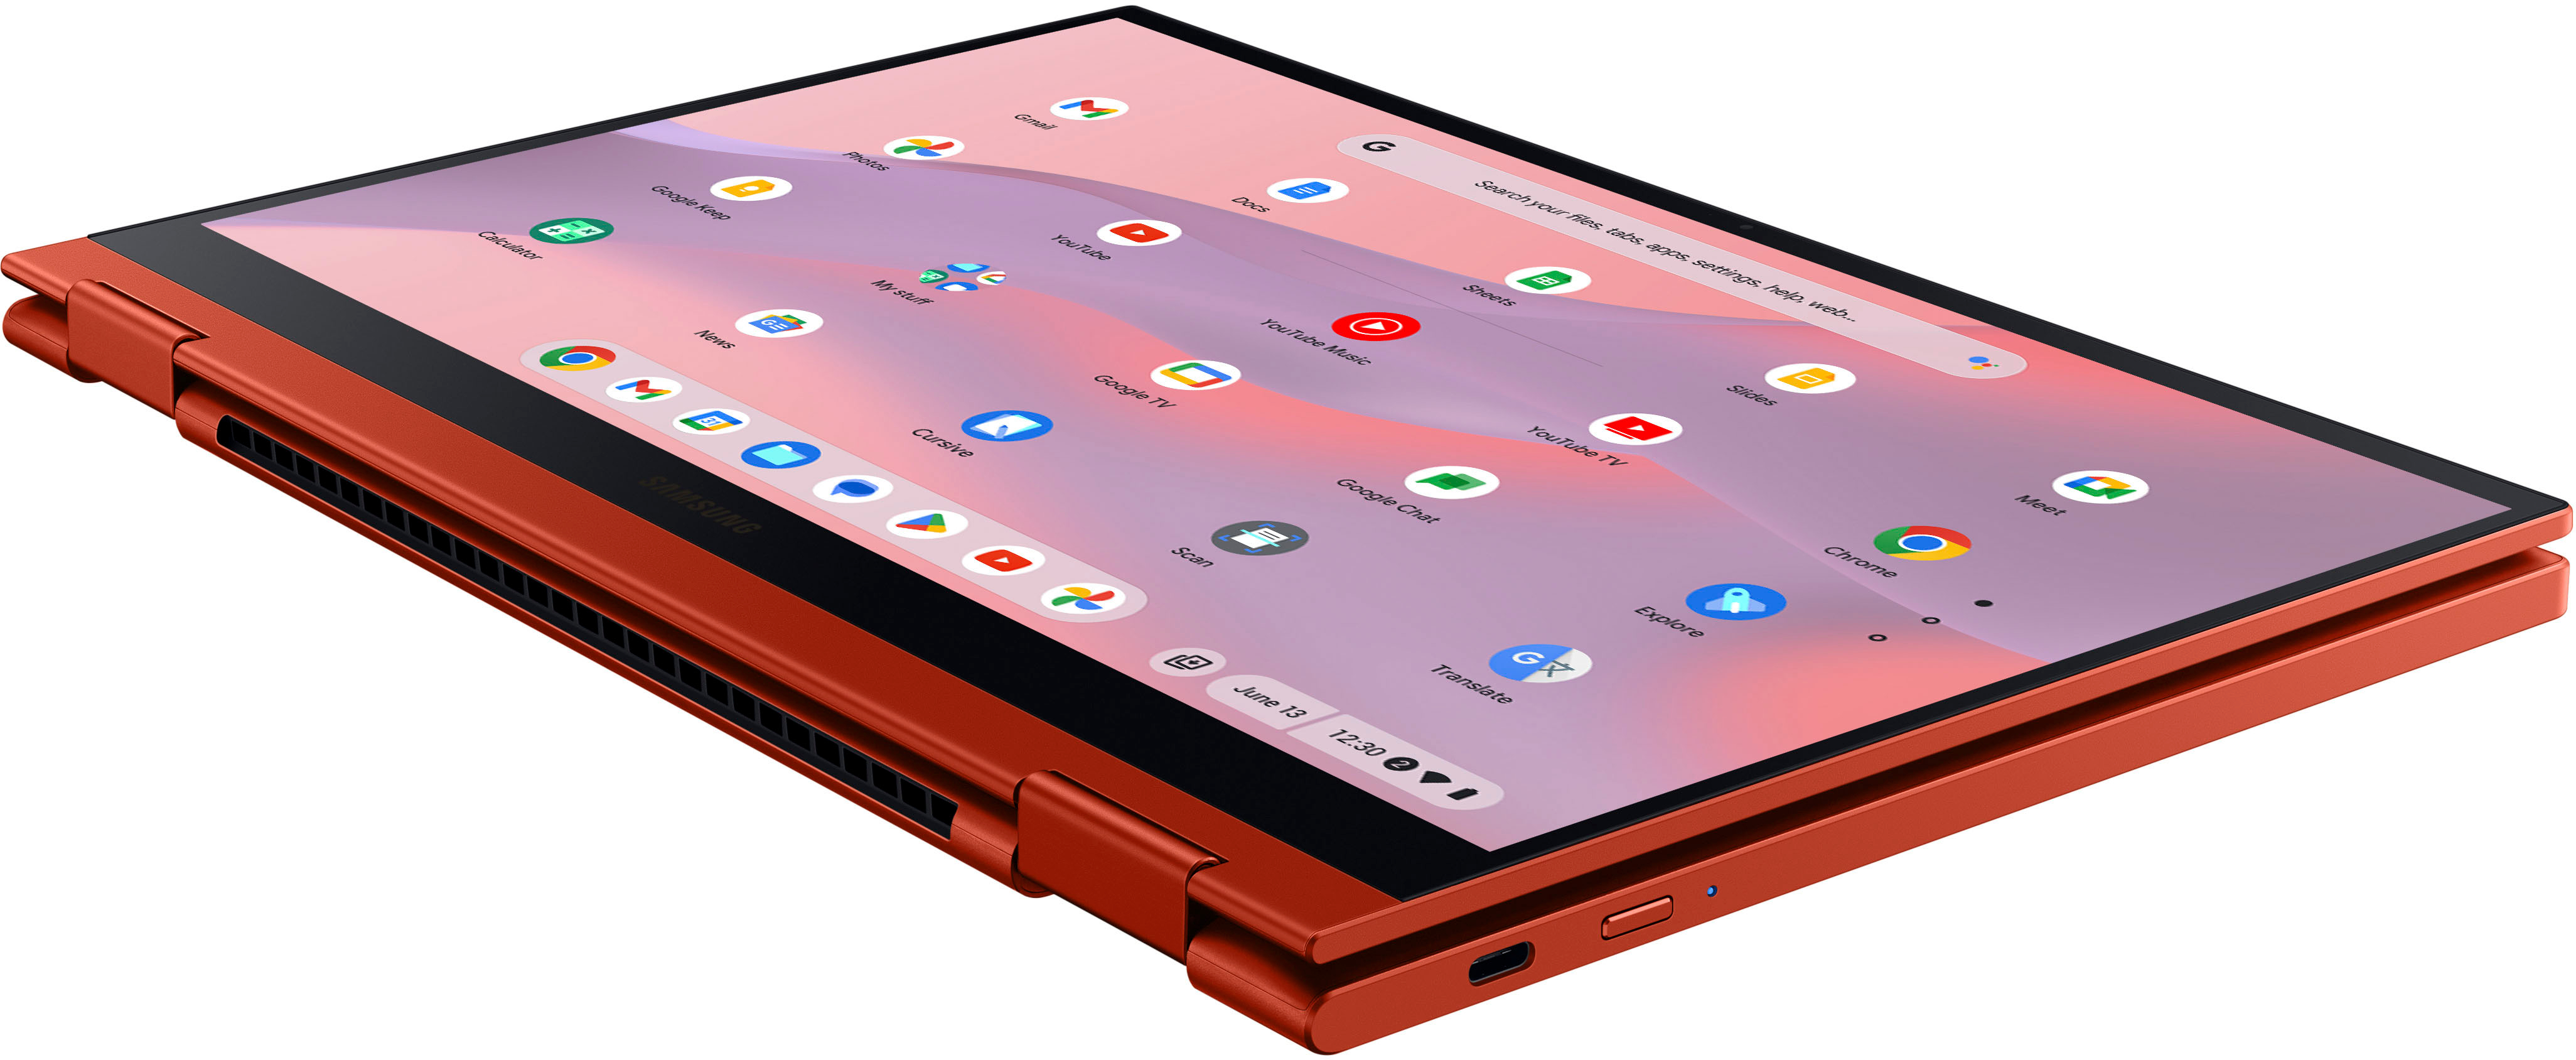 Galaxy Chromebook 2, Intel® Celeron® Processor, 64GB, 4GB RAM, Fiesta Red  Chromebook - XE530QDA-KA2US